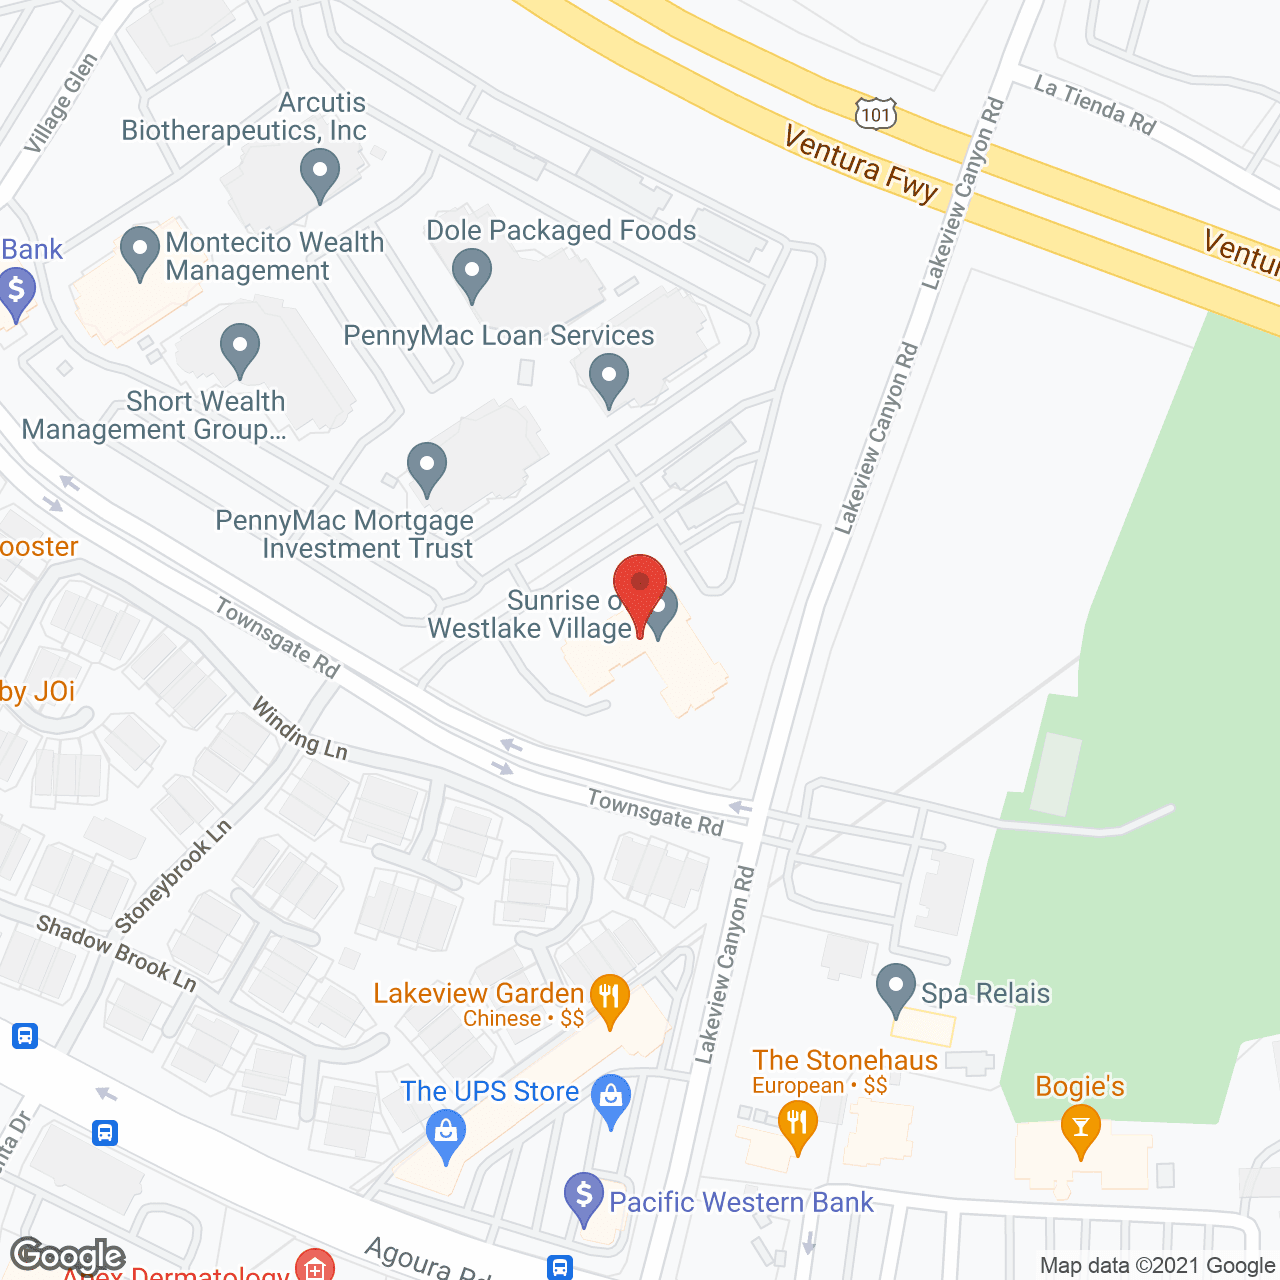 Sunrise of Westlake Village in google map